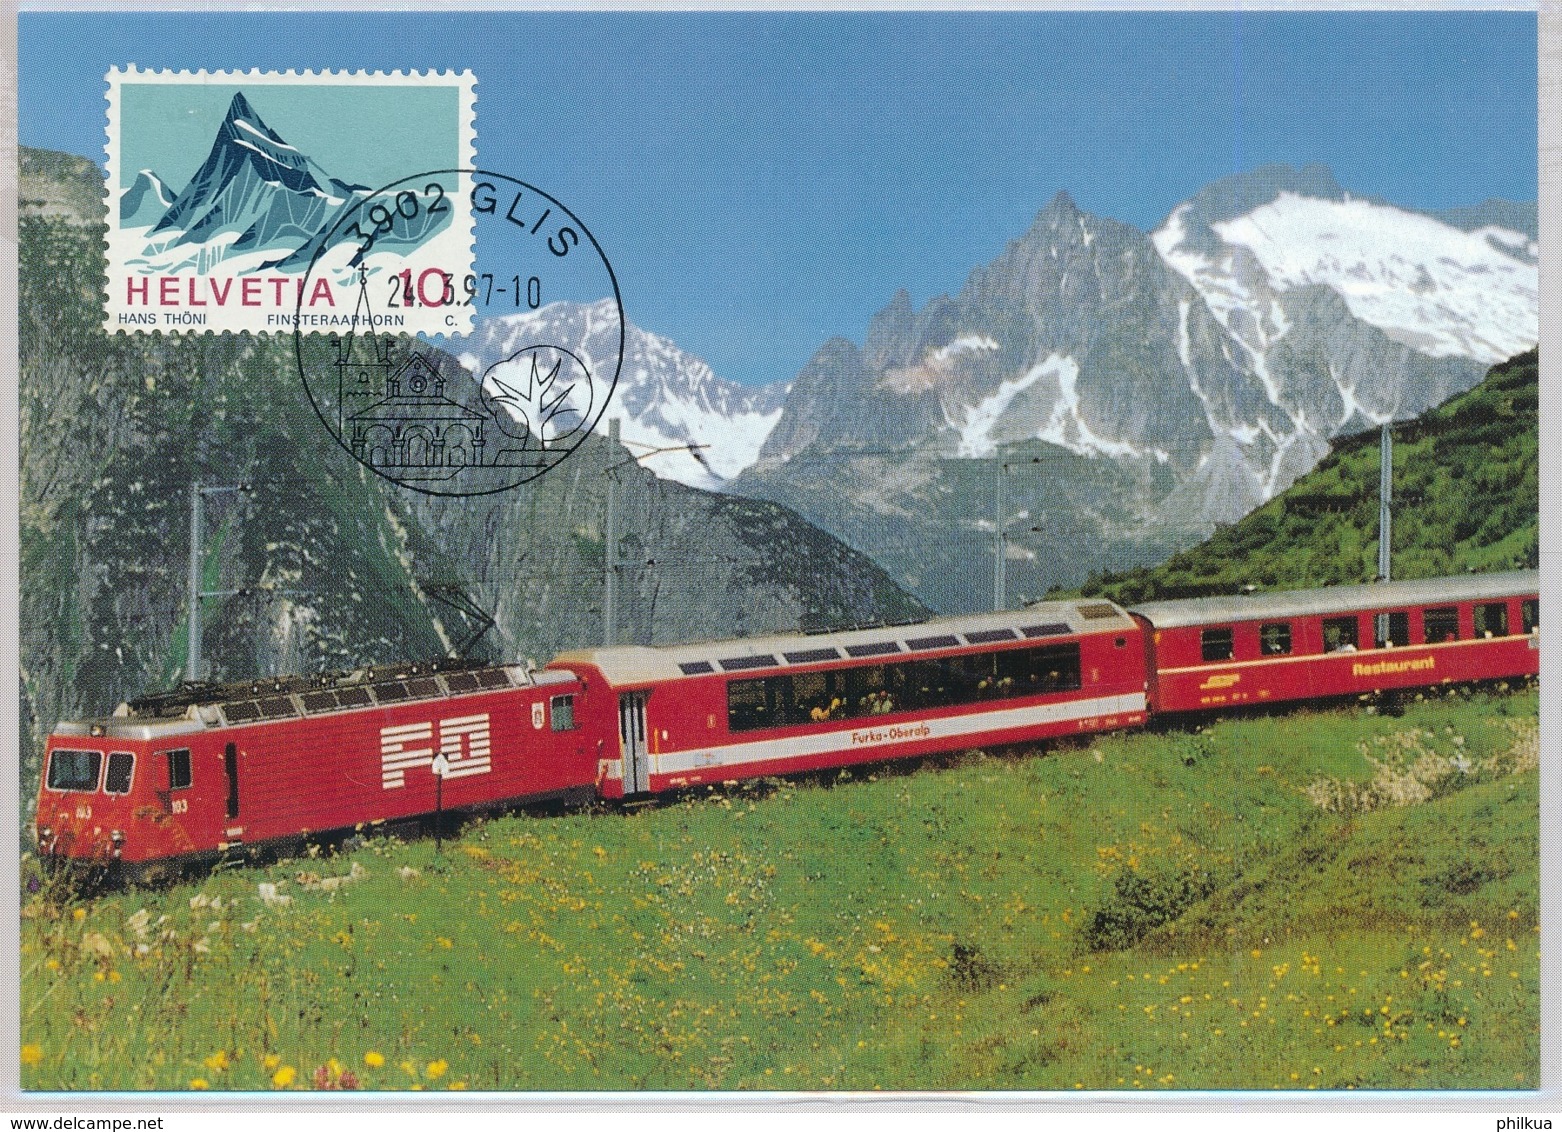 BAHNPOST - Furka - Oberalp Bahn FO - Glis - Maximumkarte - Ferrovie